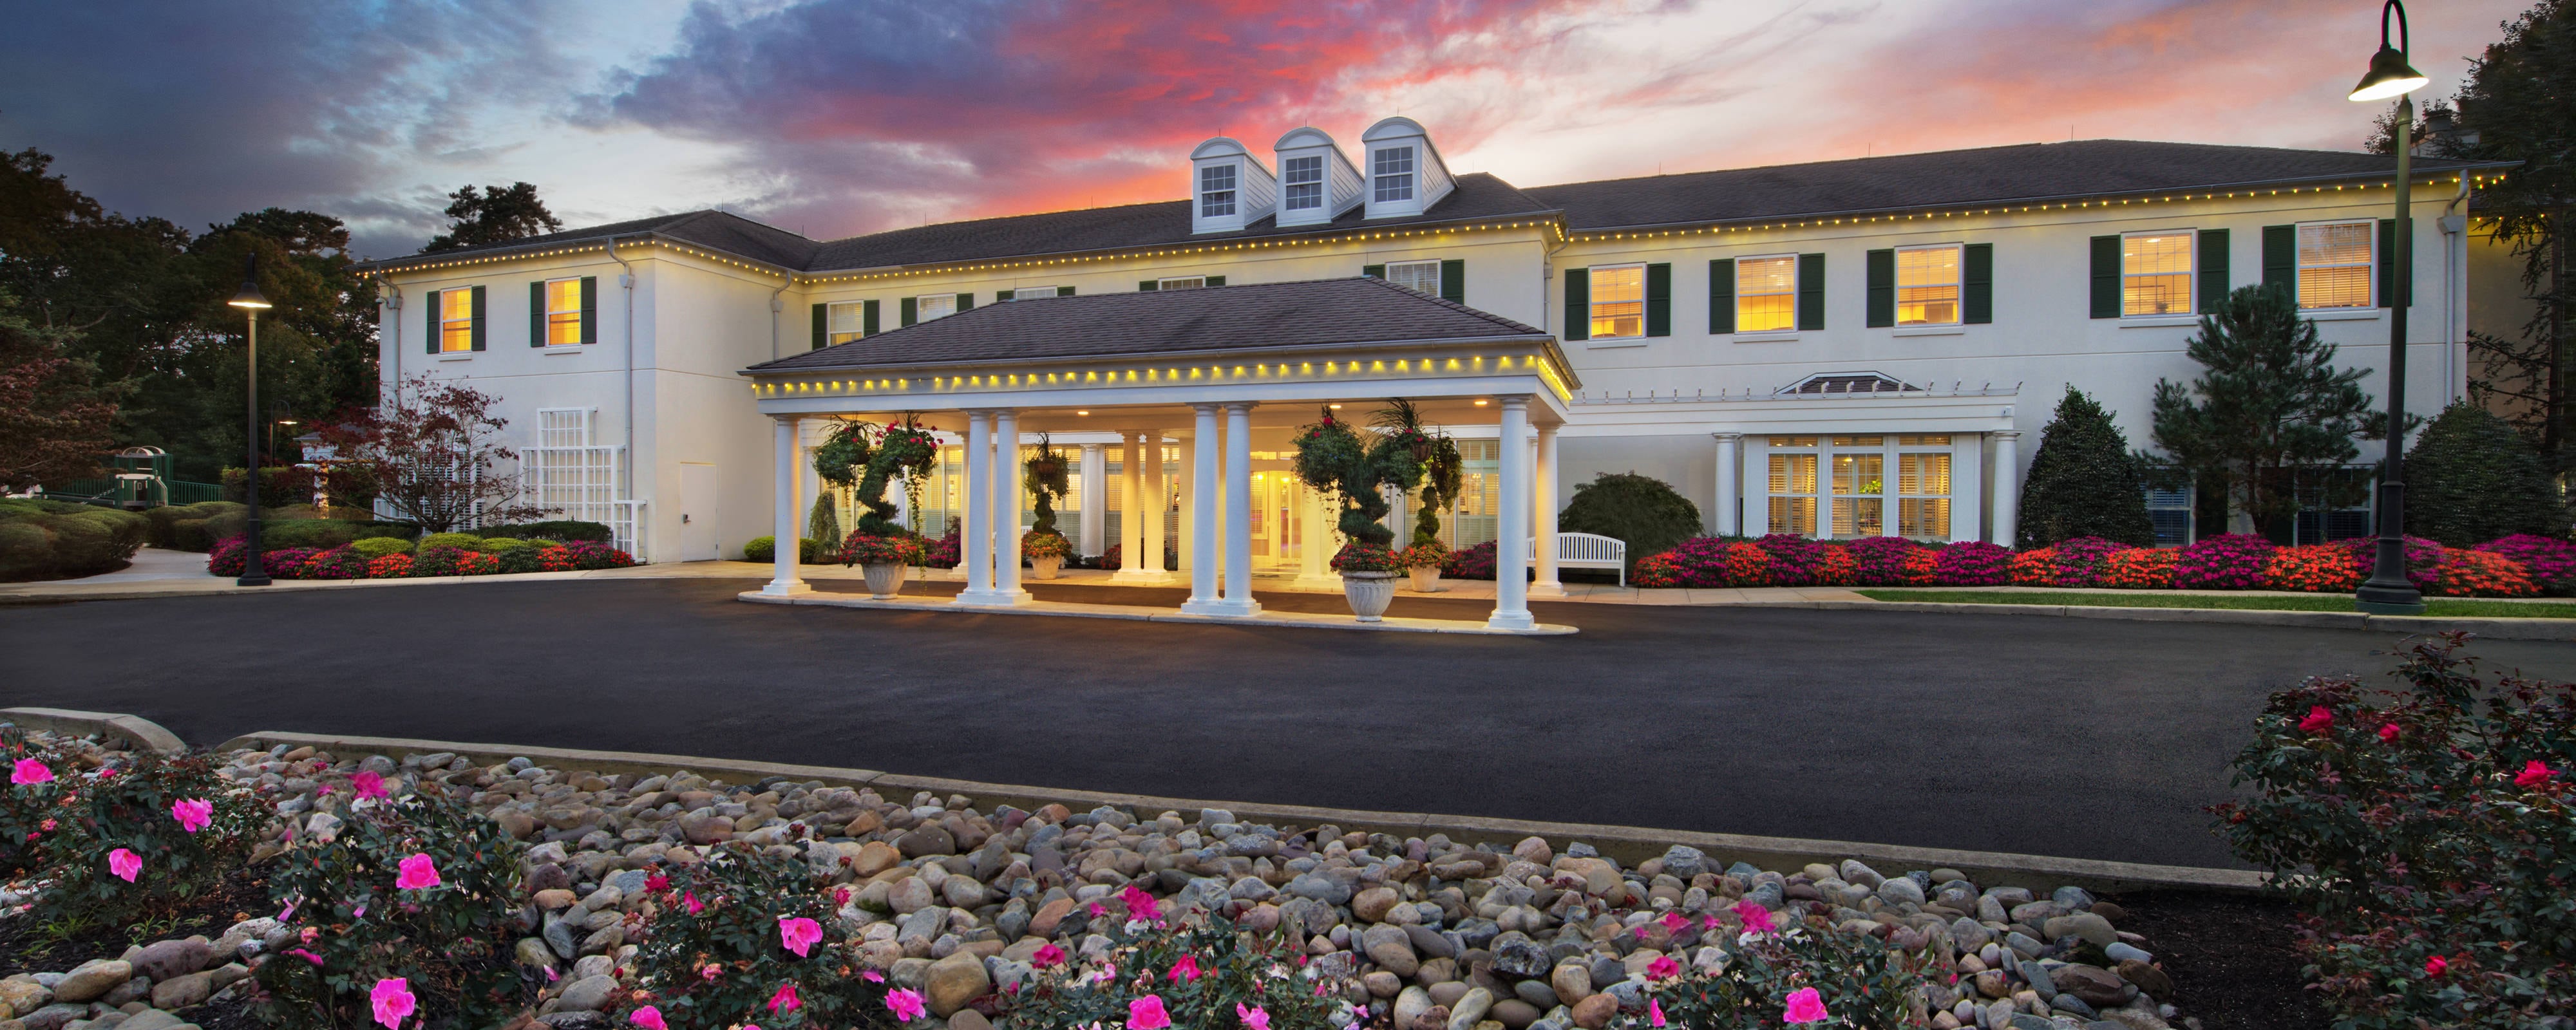 Family Resorts in New Jersey  Marriotts Fairway Villas